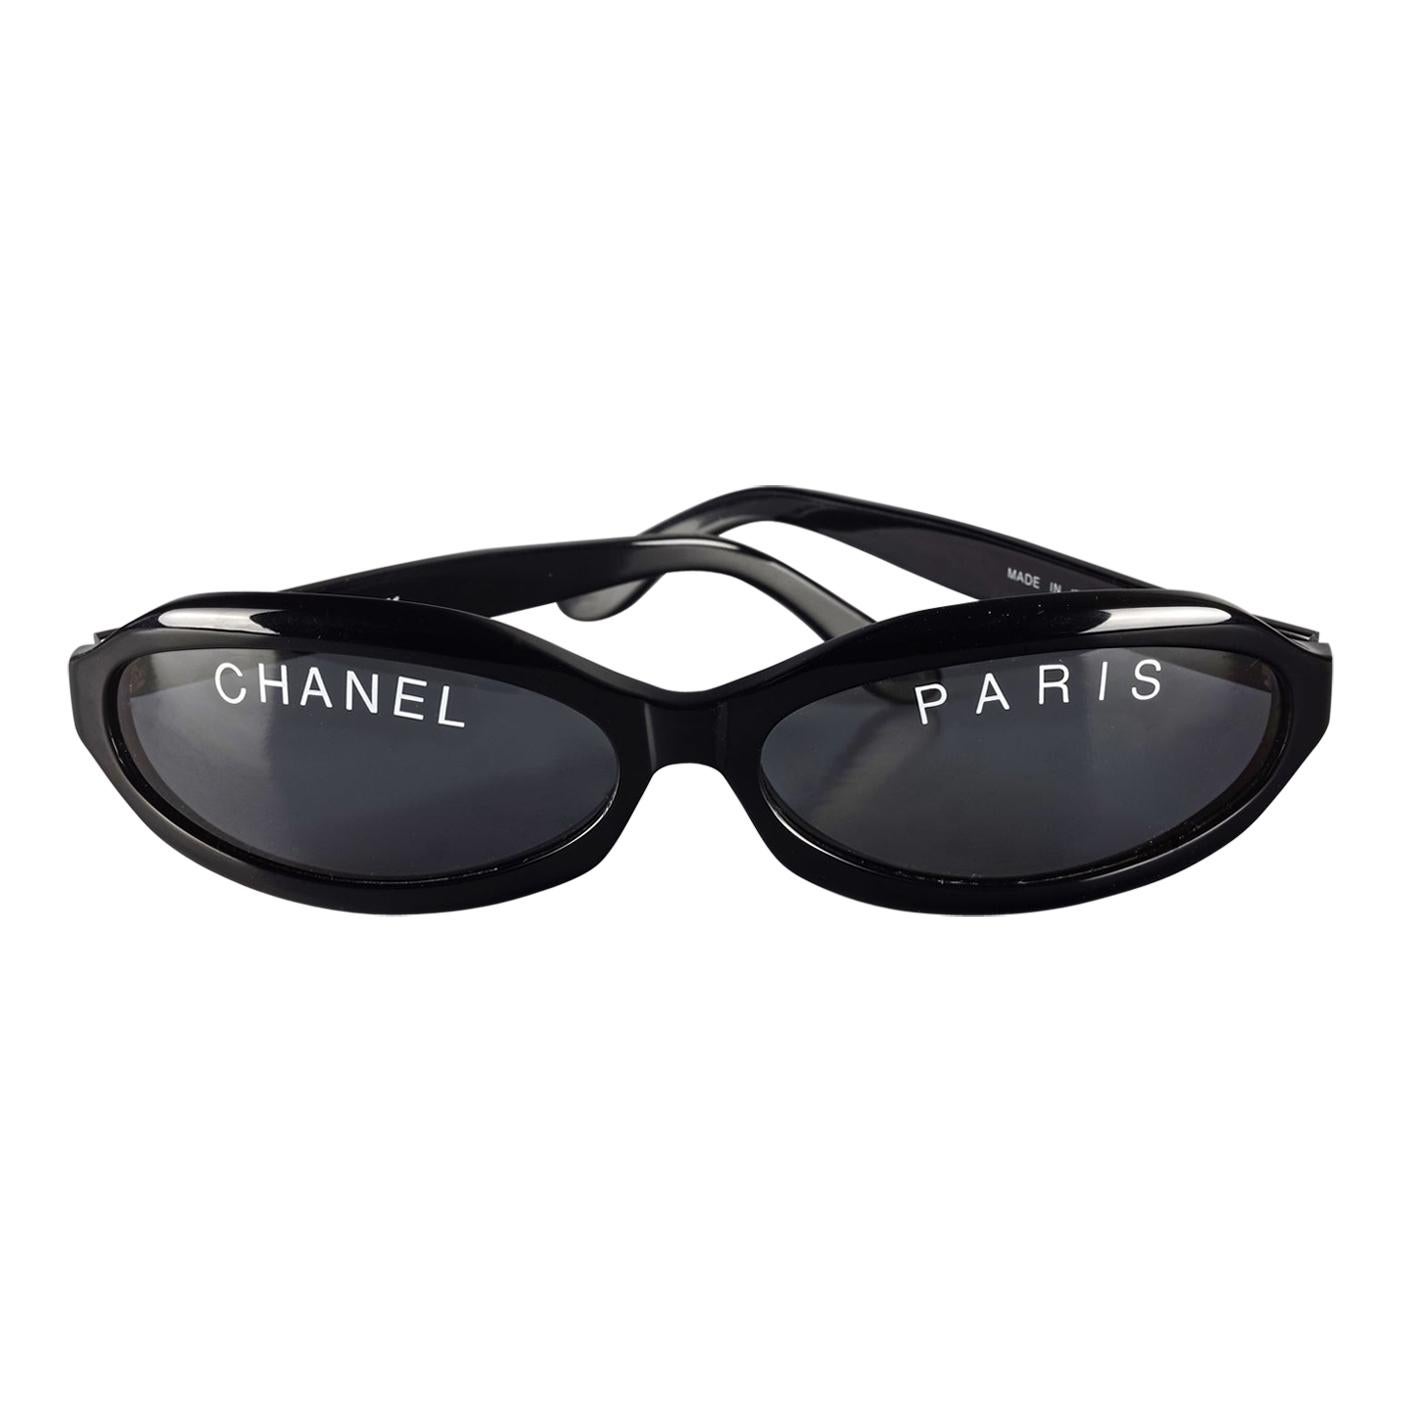 coco chanel glasses frames men